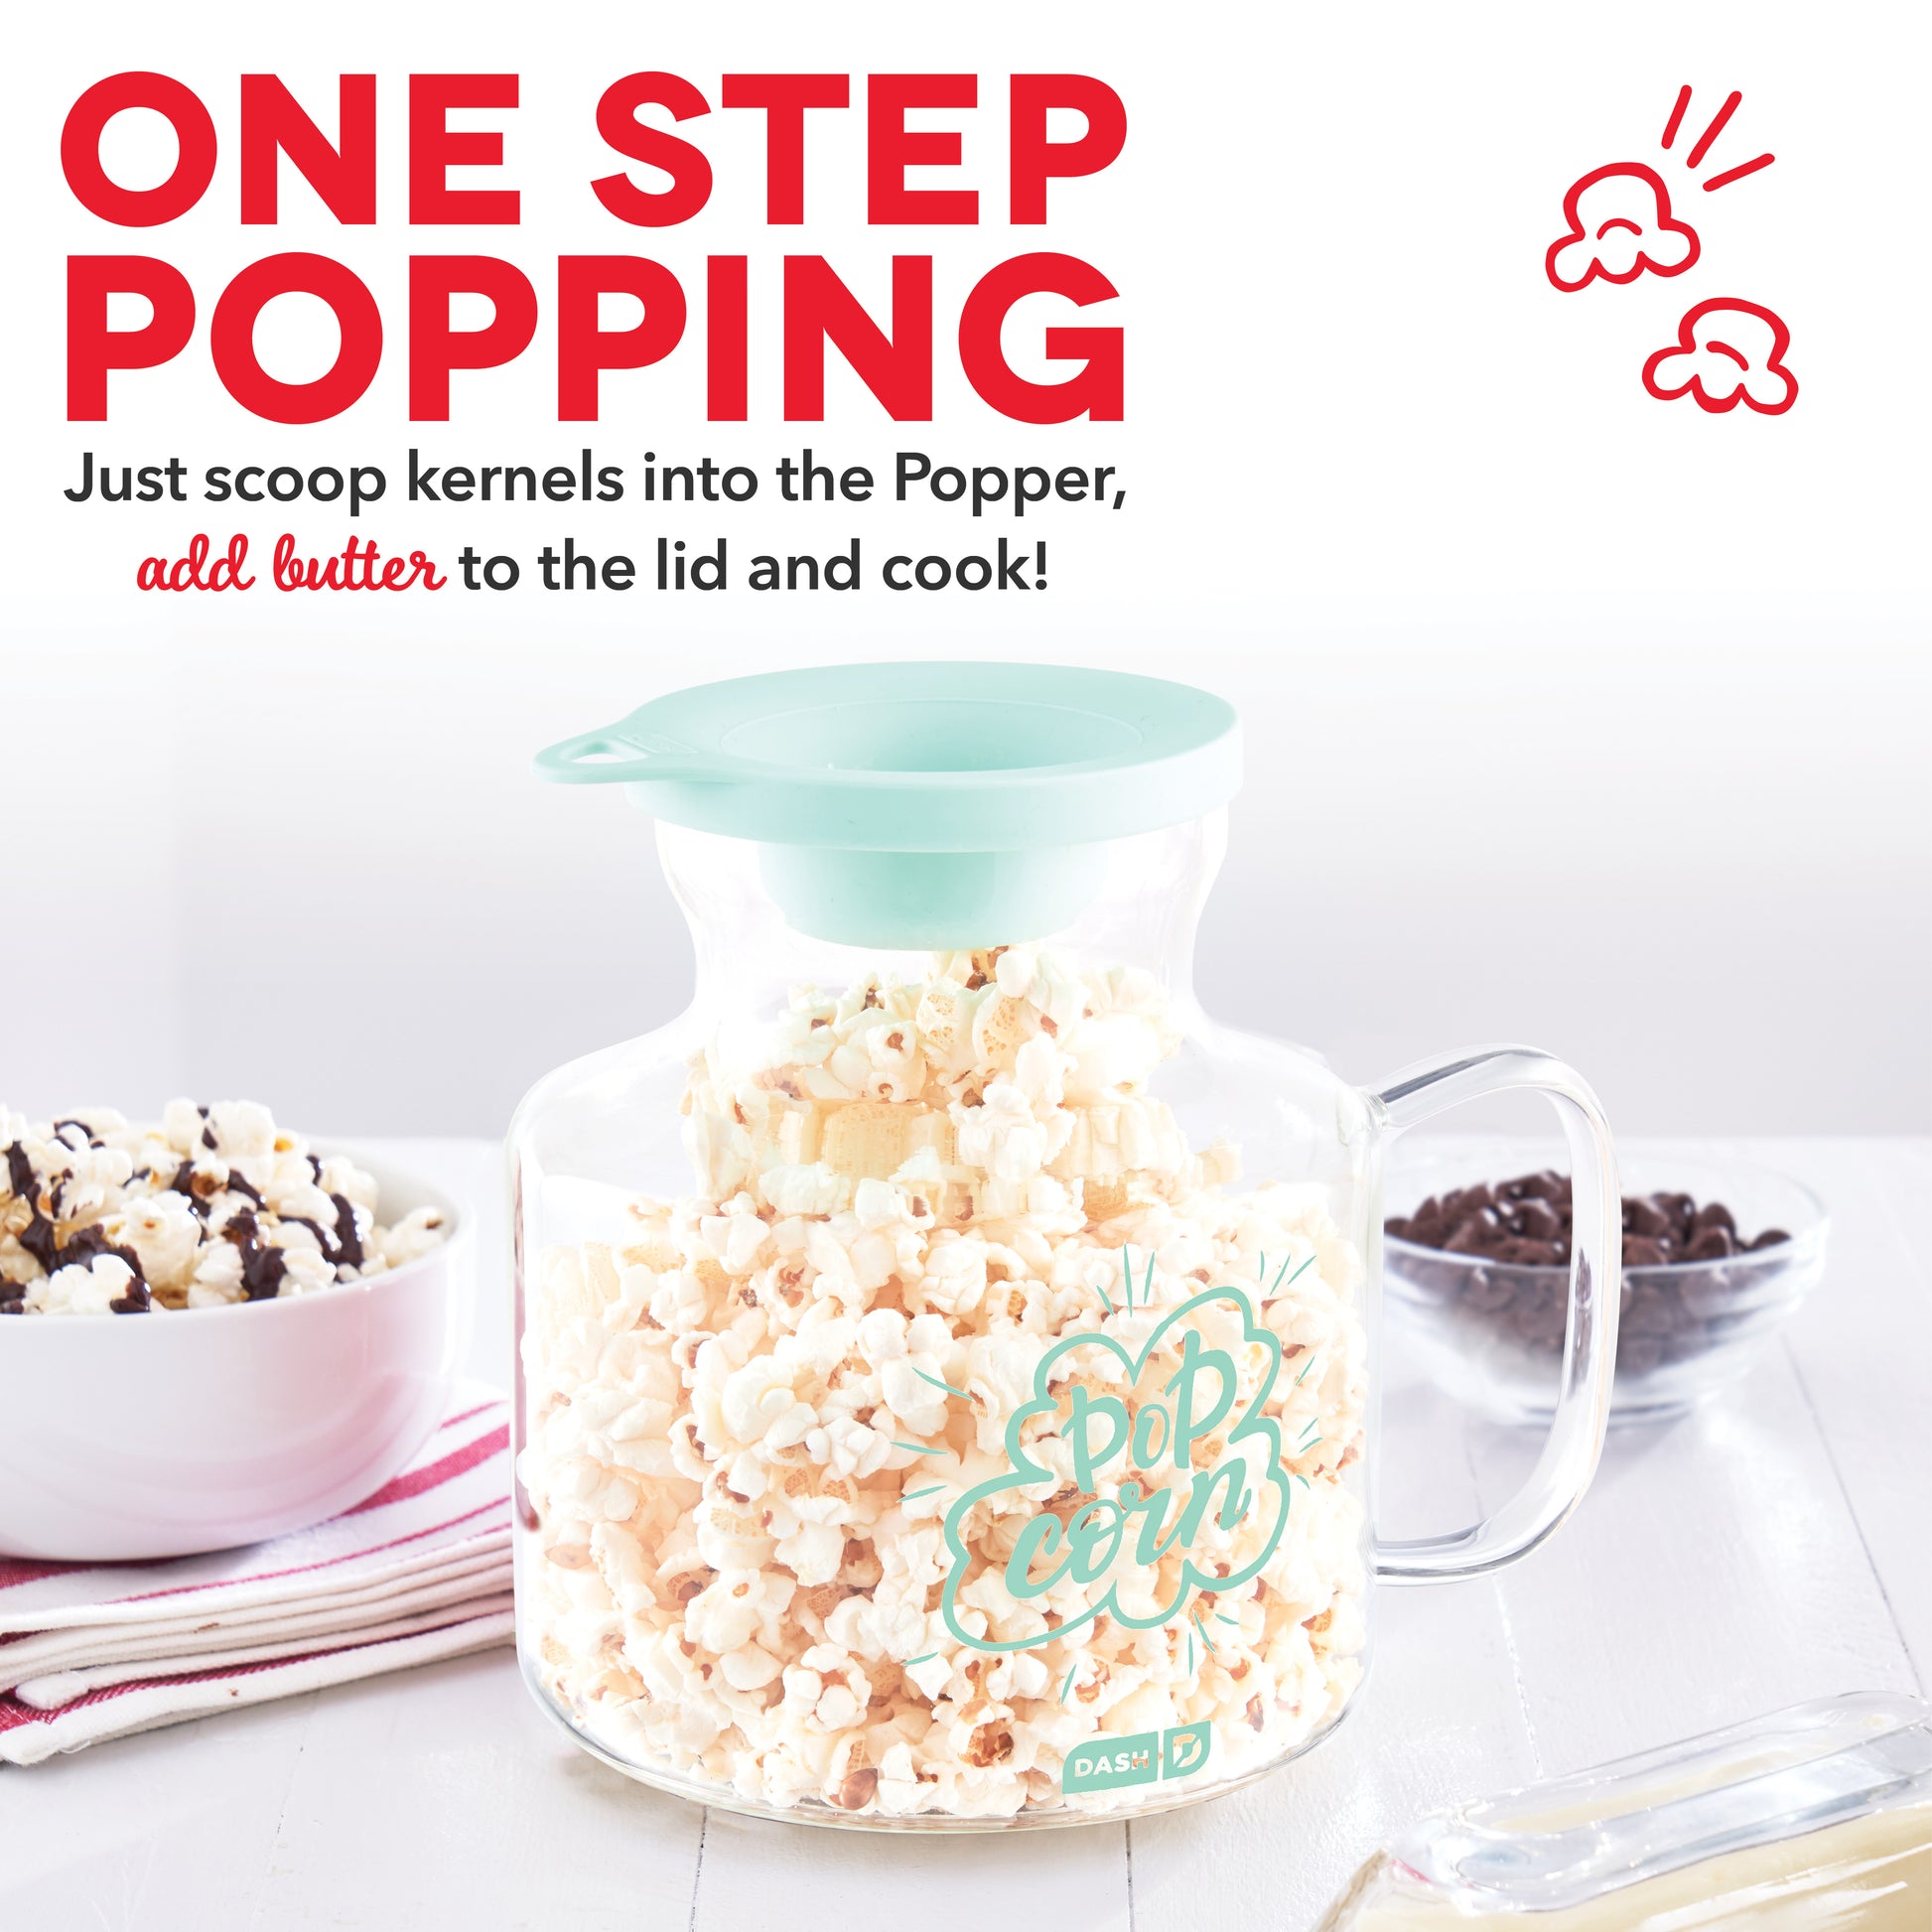 Dash Microwave Popcorn Popper - Aqua